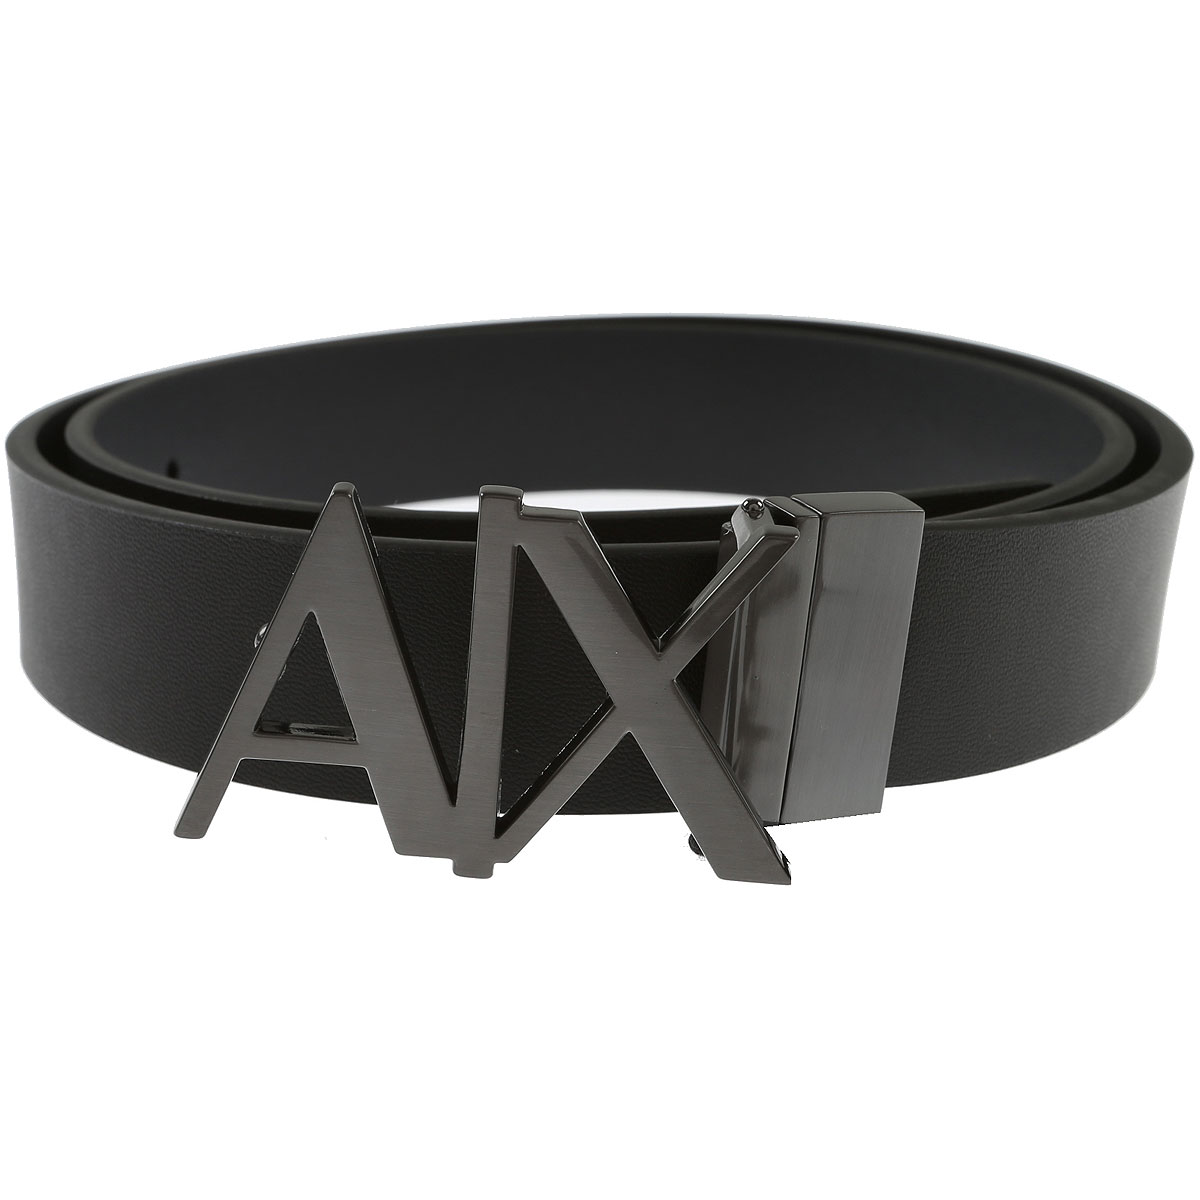 Mens Belts Armani Exchange, Style code: 951017-cc505-43120